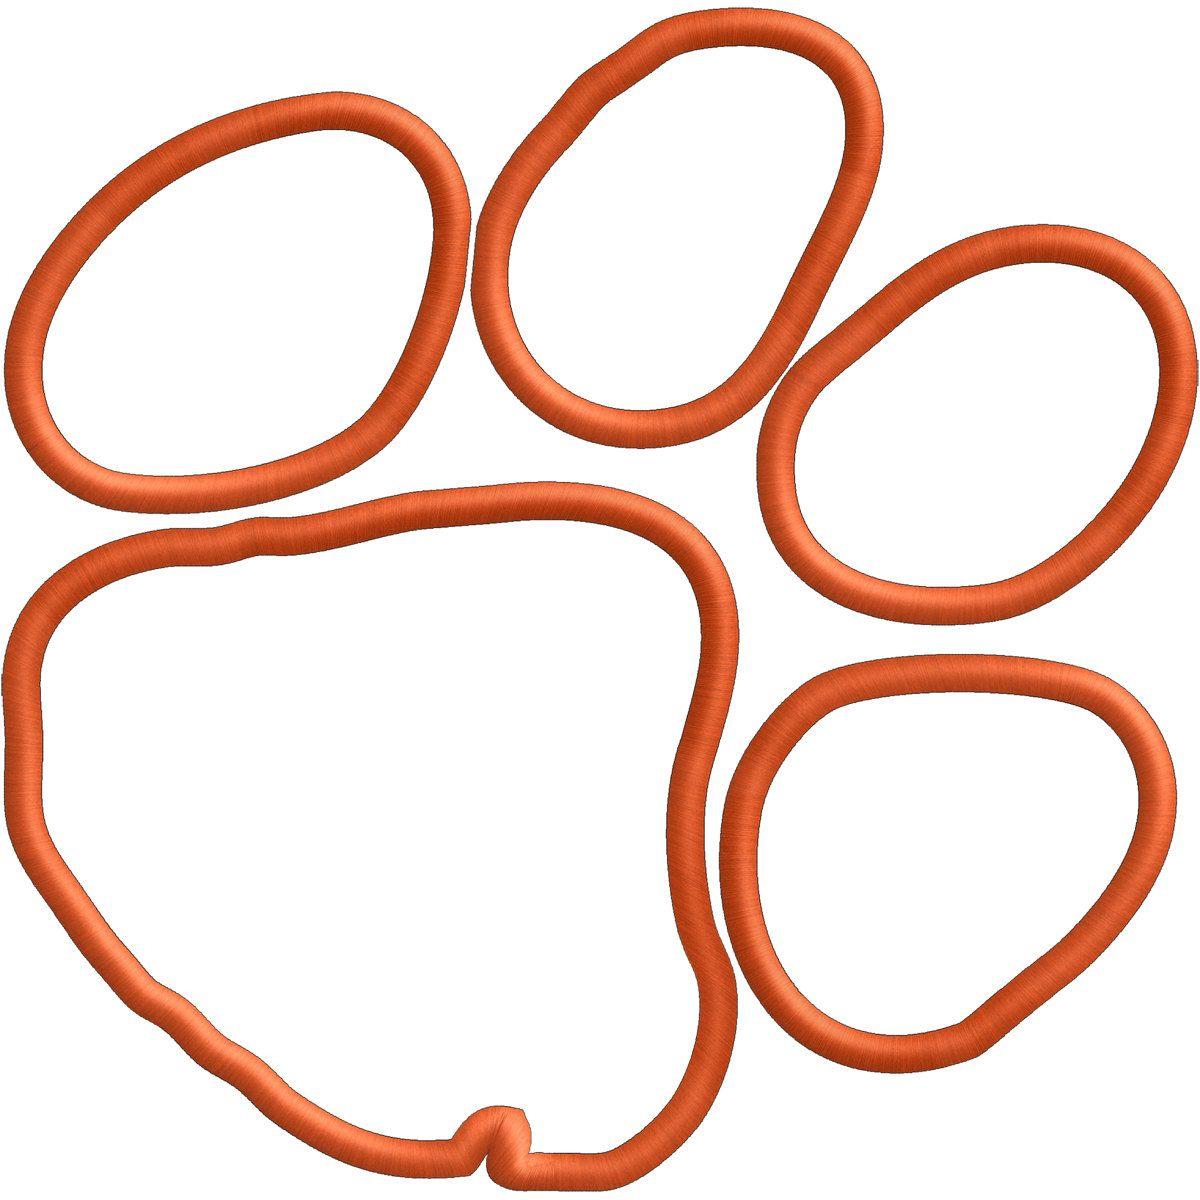 Orange O Paw Logo - Free Tiger Paw Print, Download Free Clip Art, Free Clip Art on ...